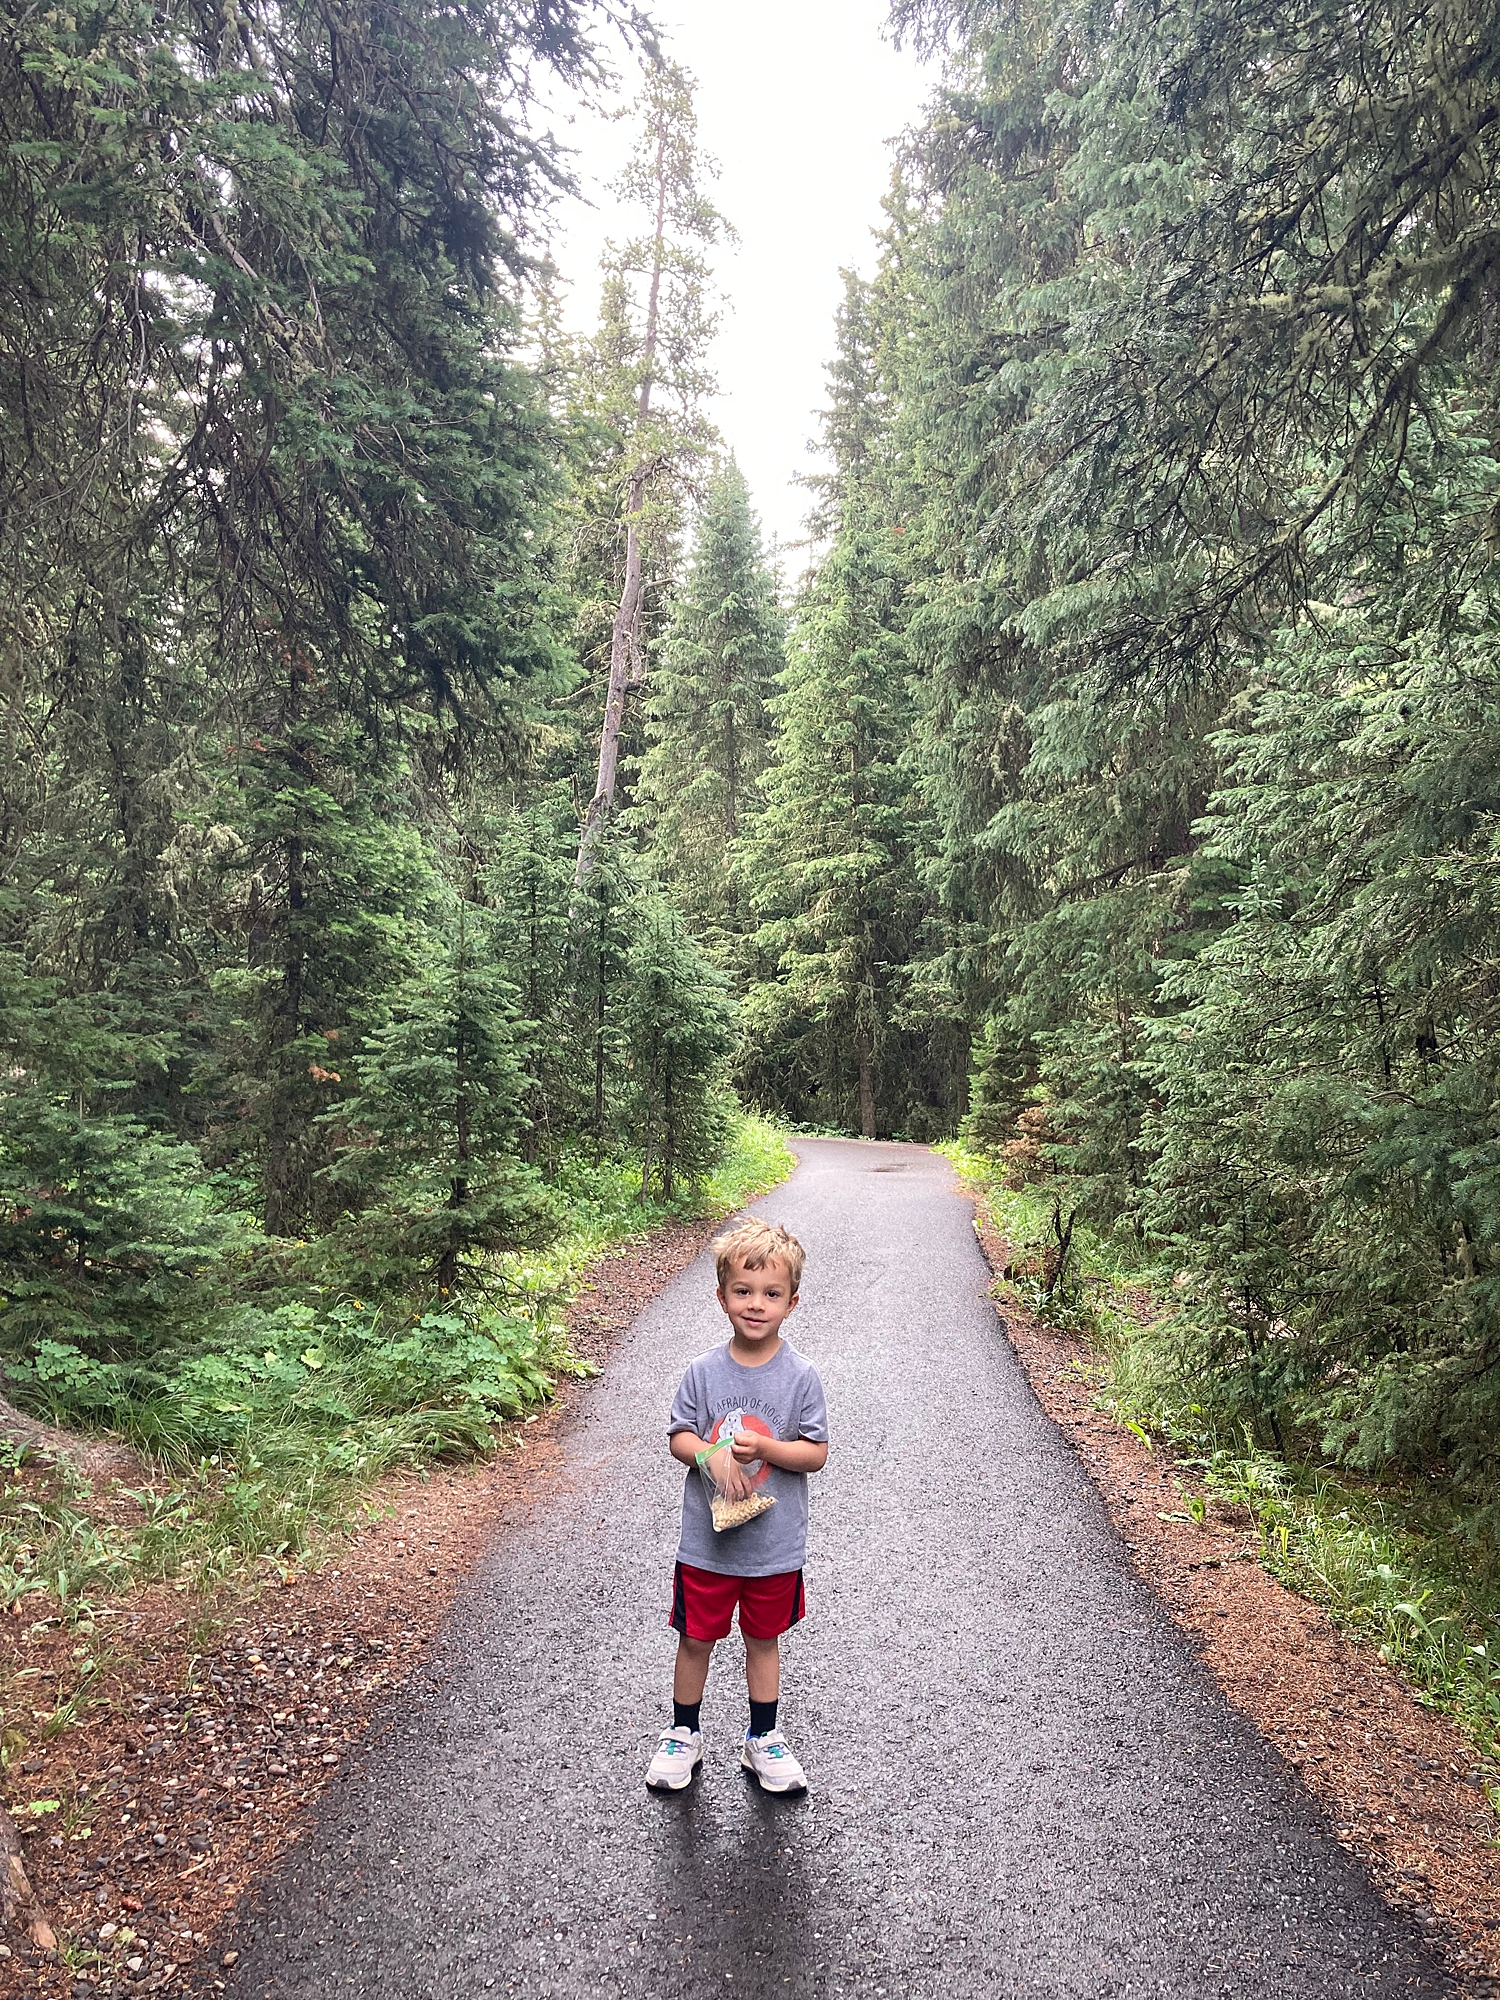 palisade_falls_easy_hiking_trails_for_kids_Montana